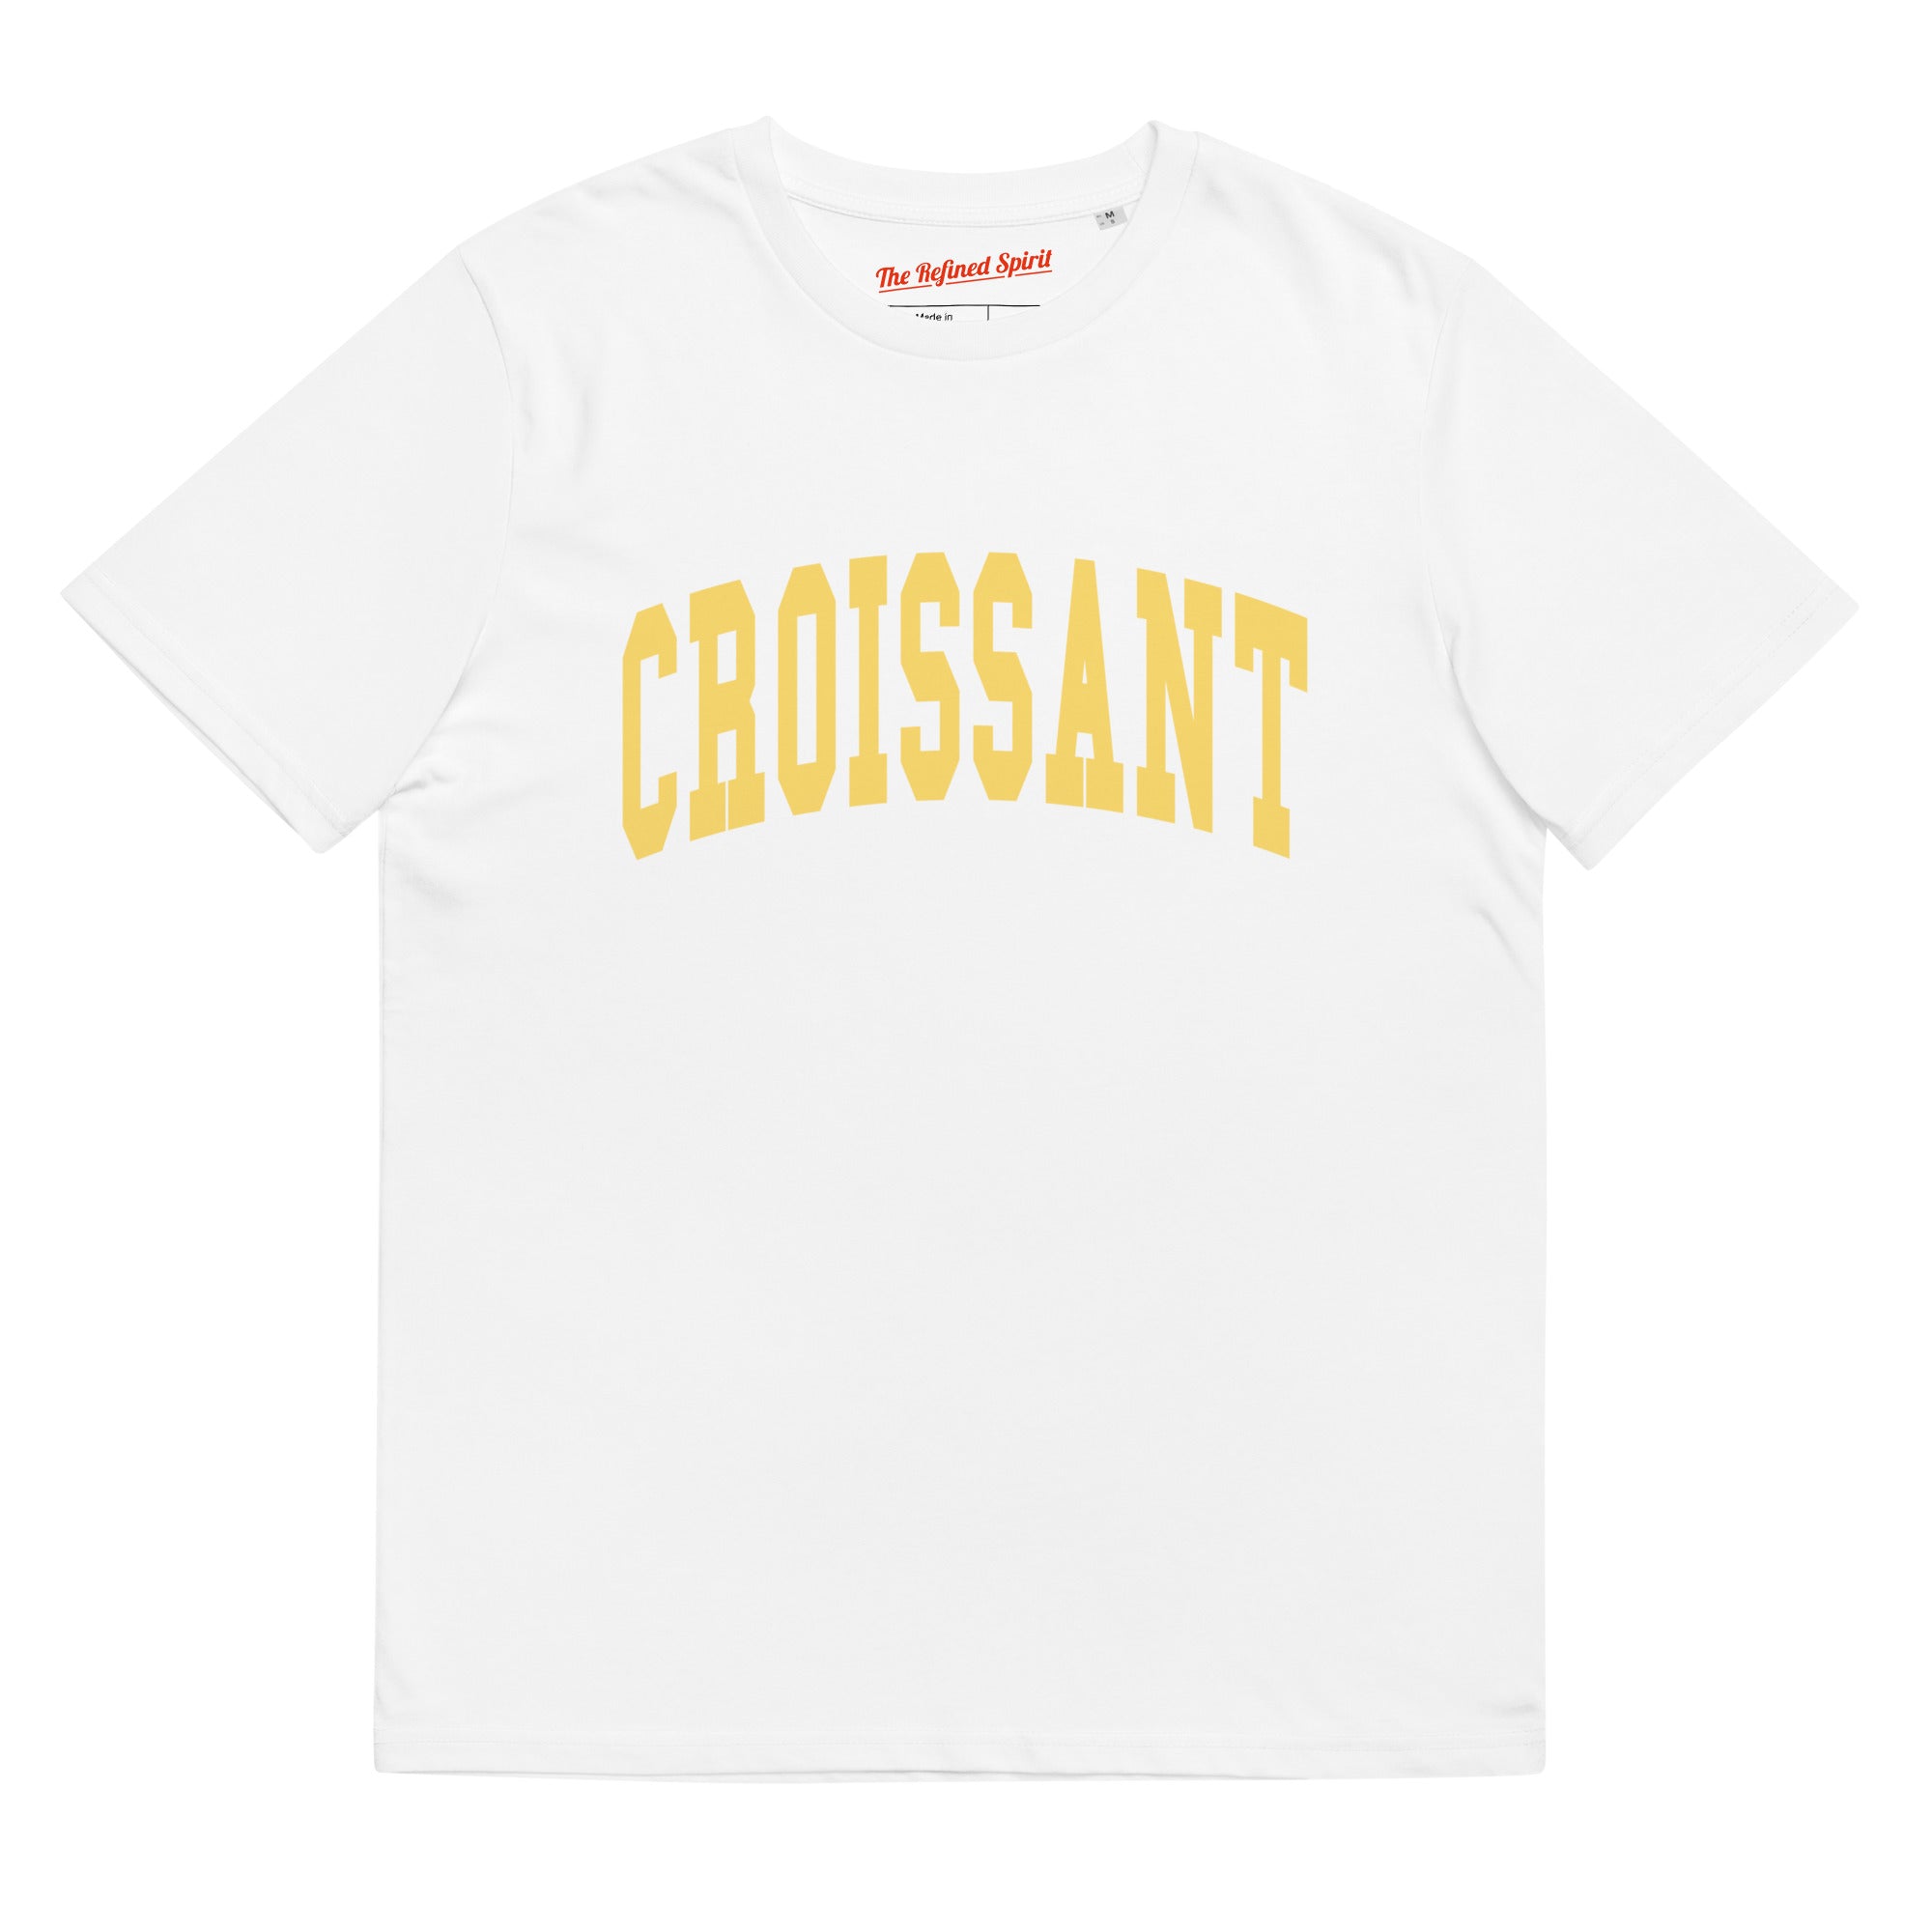 Croissant - Organic T-shirt